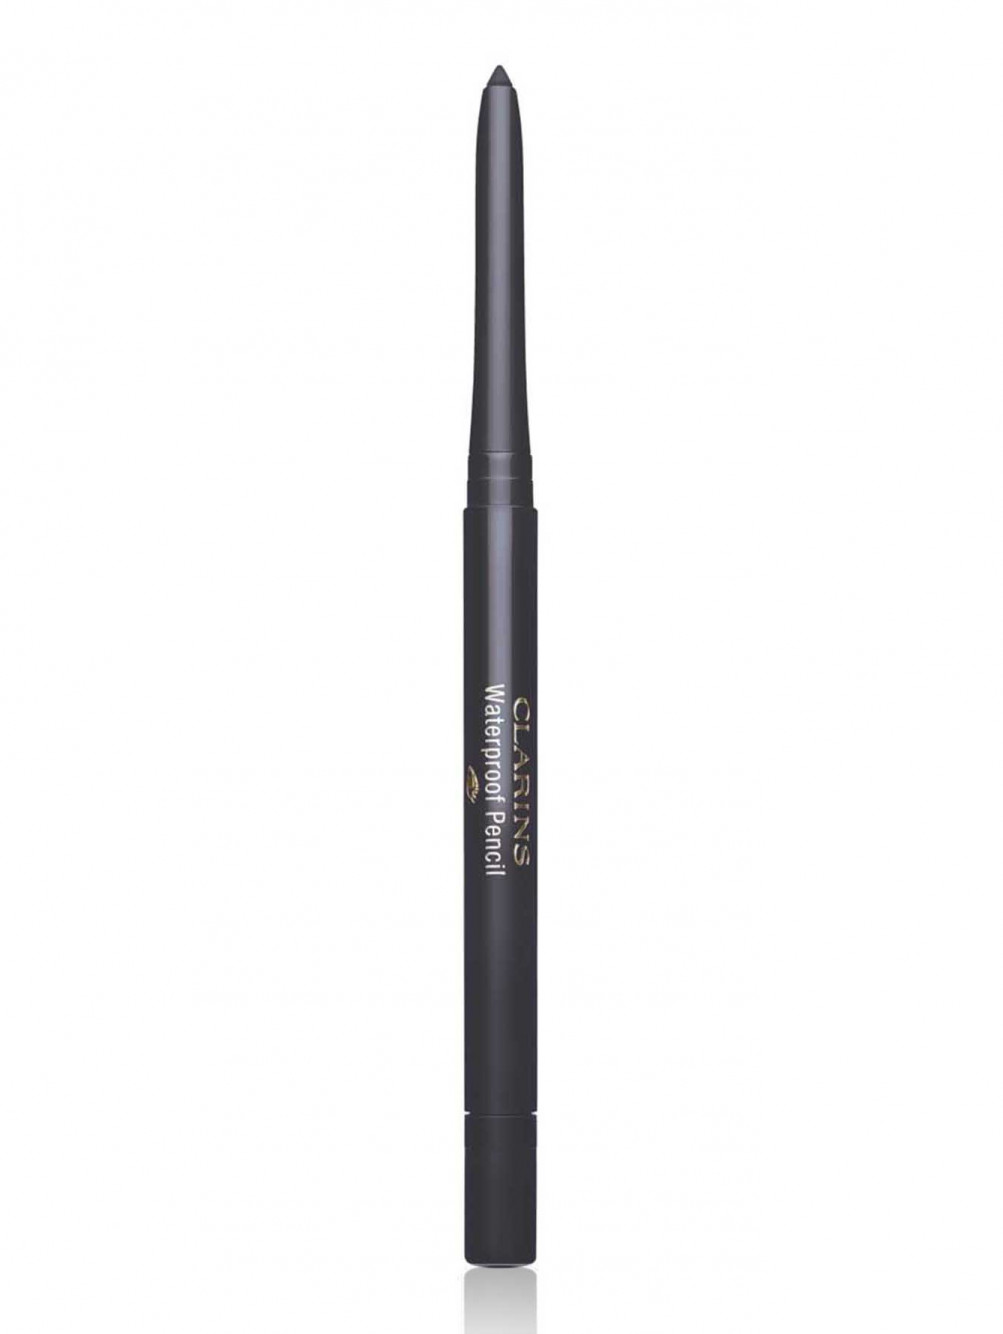 Карандаш для глаз Waterproof Pencil 06 Makeup - Общий вид